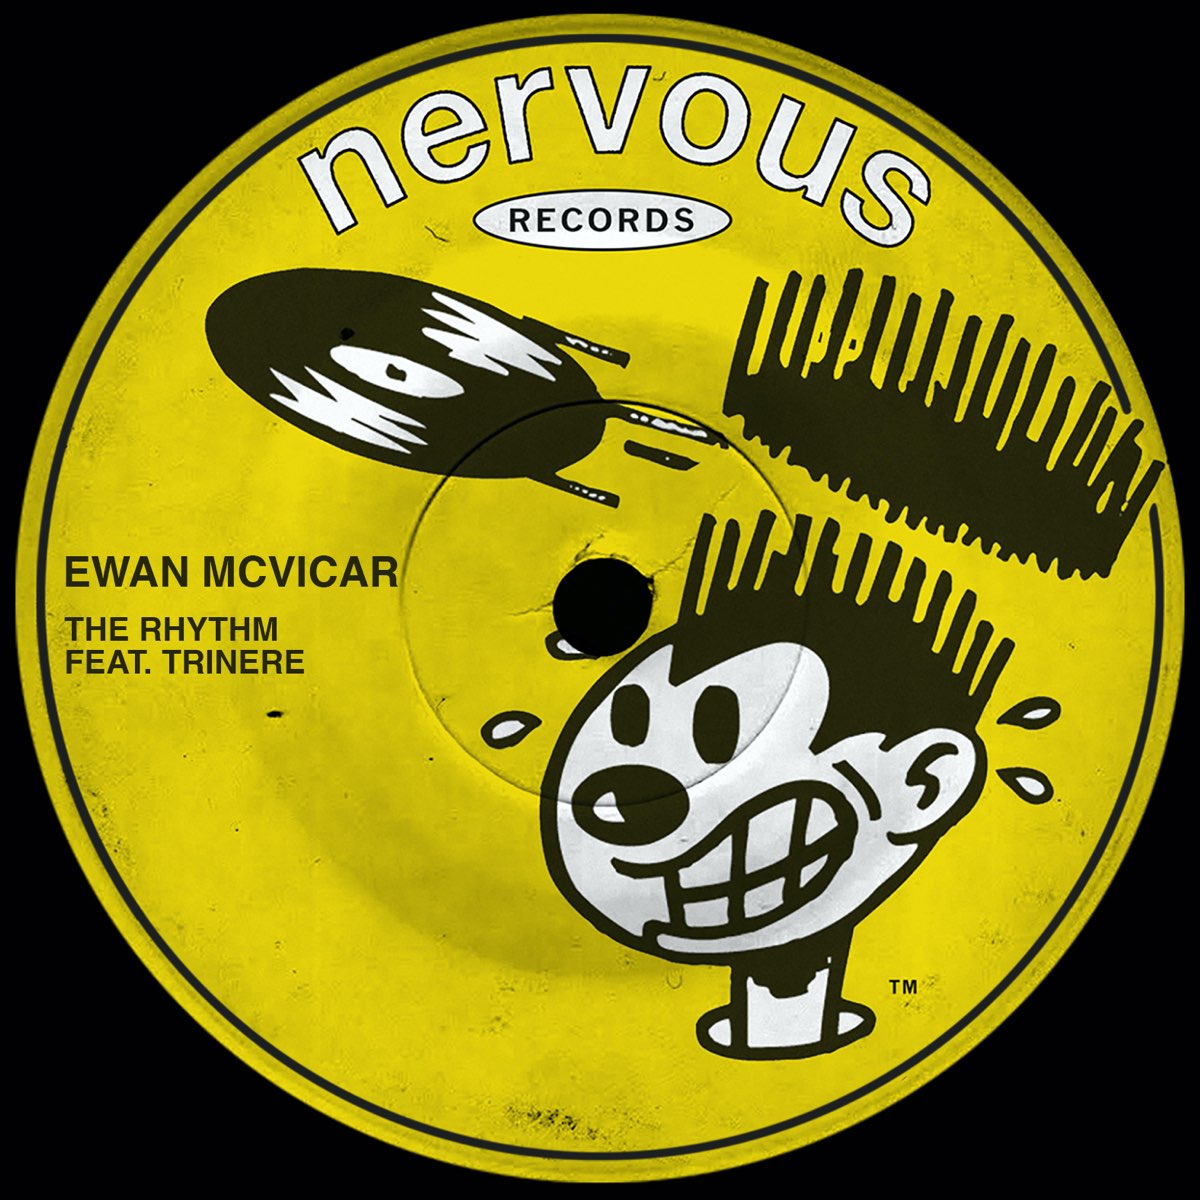 Ewan McVicar ft. featuring Trinere The Rhythm cover artwork